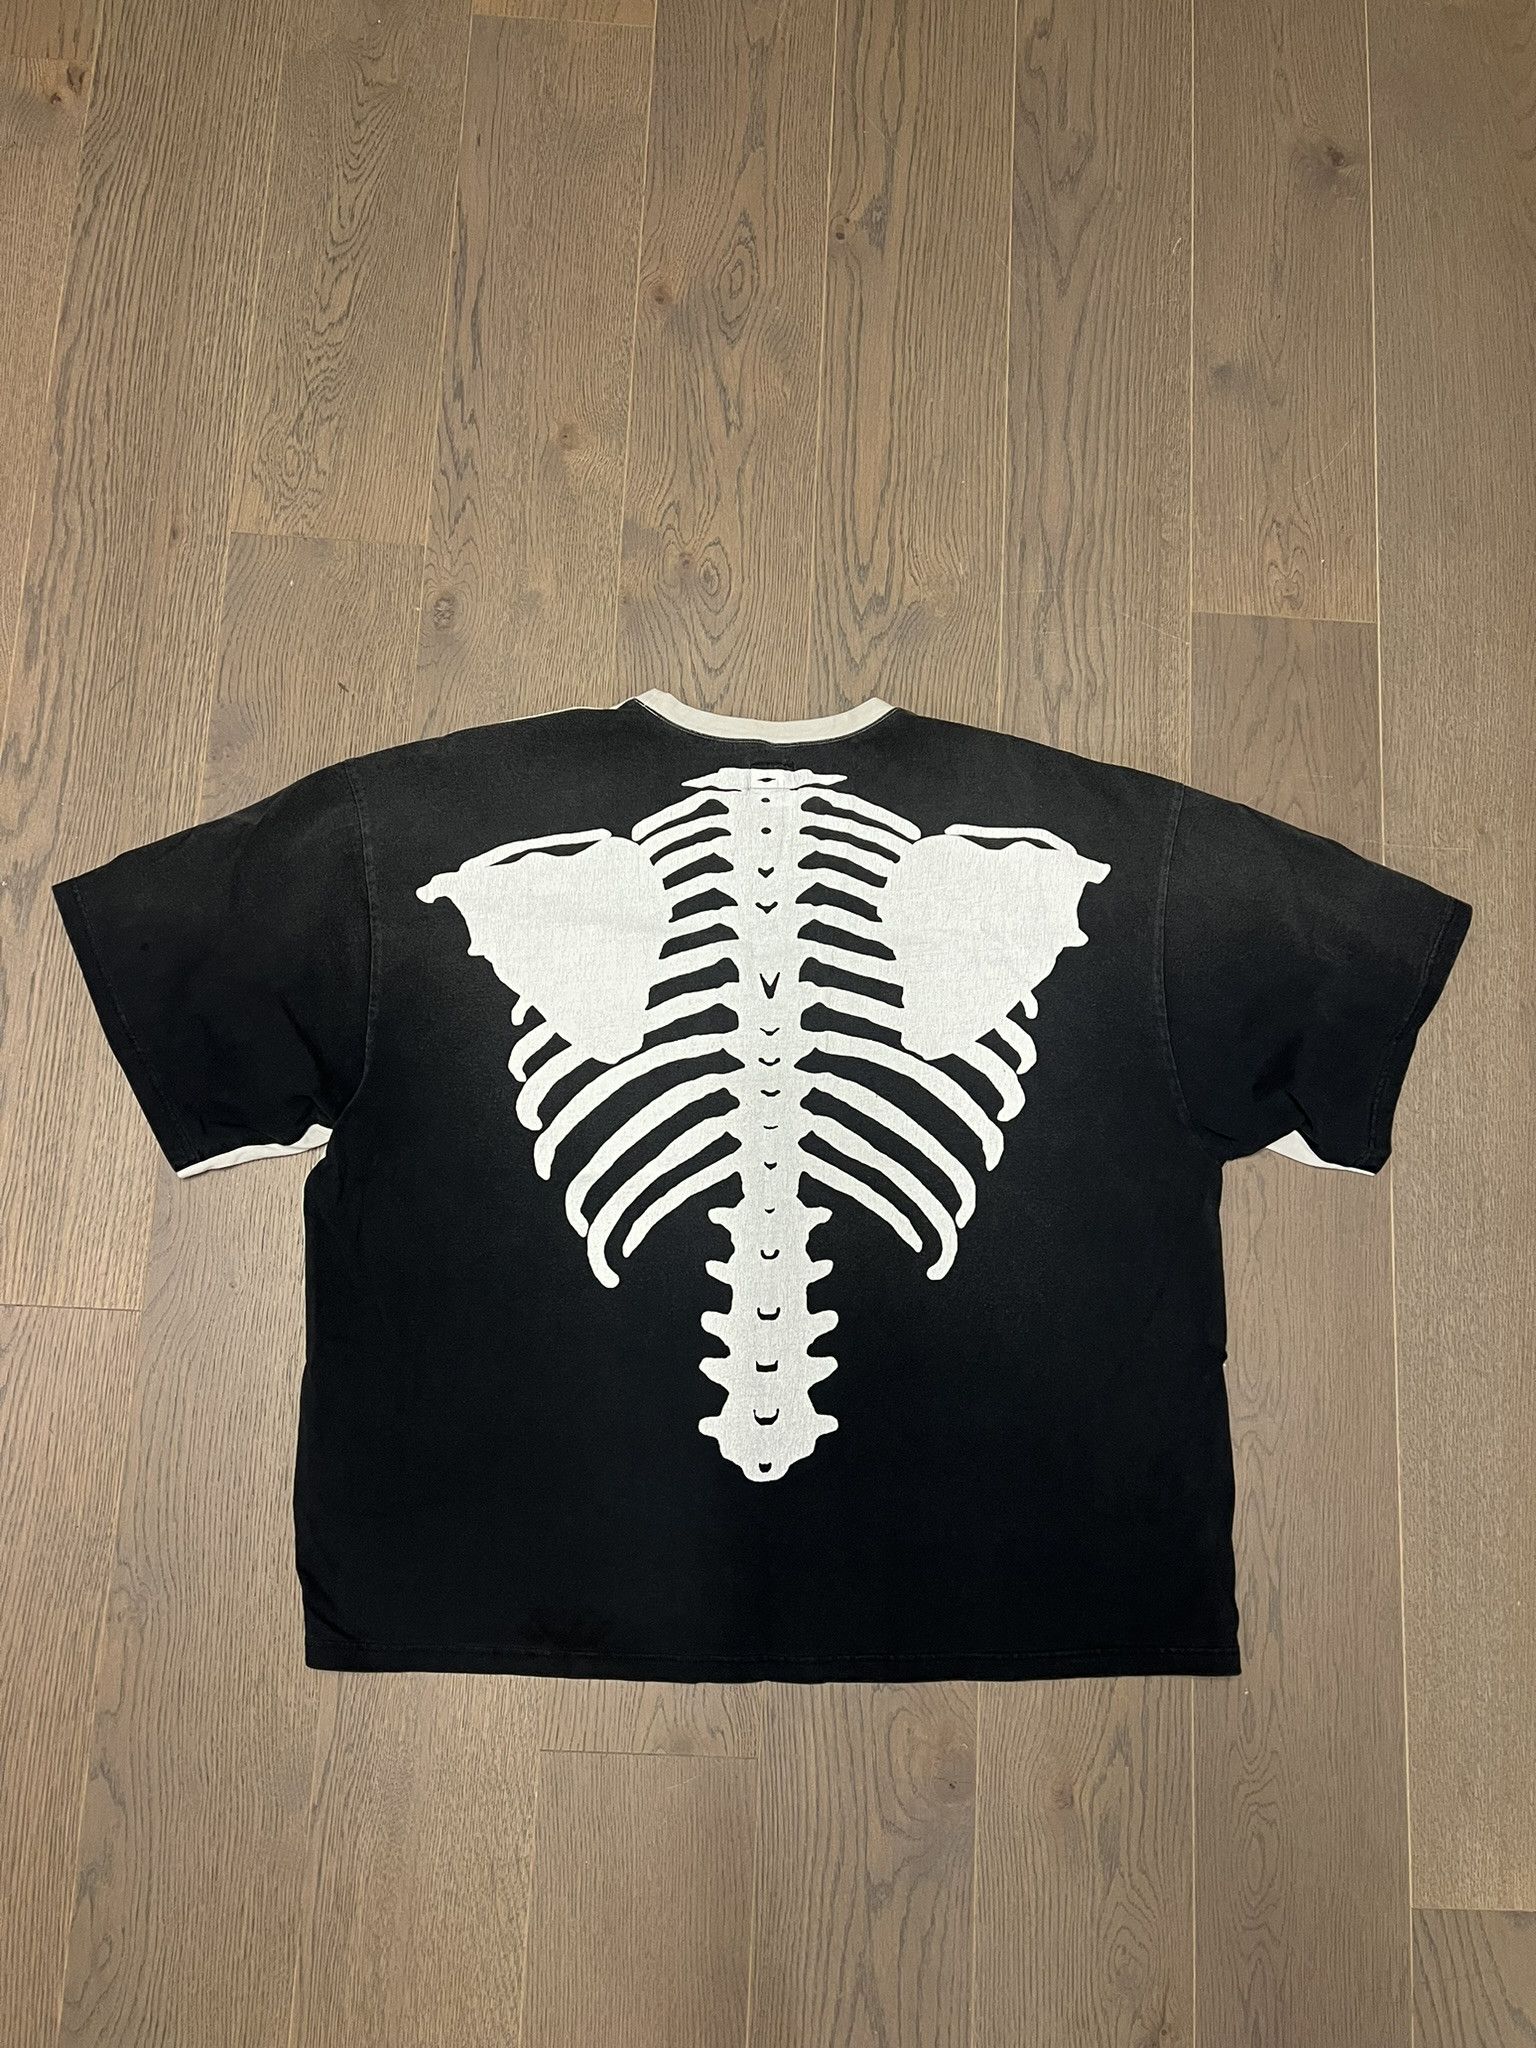 Kapital Kapital T-shirt with Classic Skeleton Design | Grailed